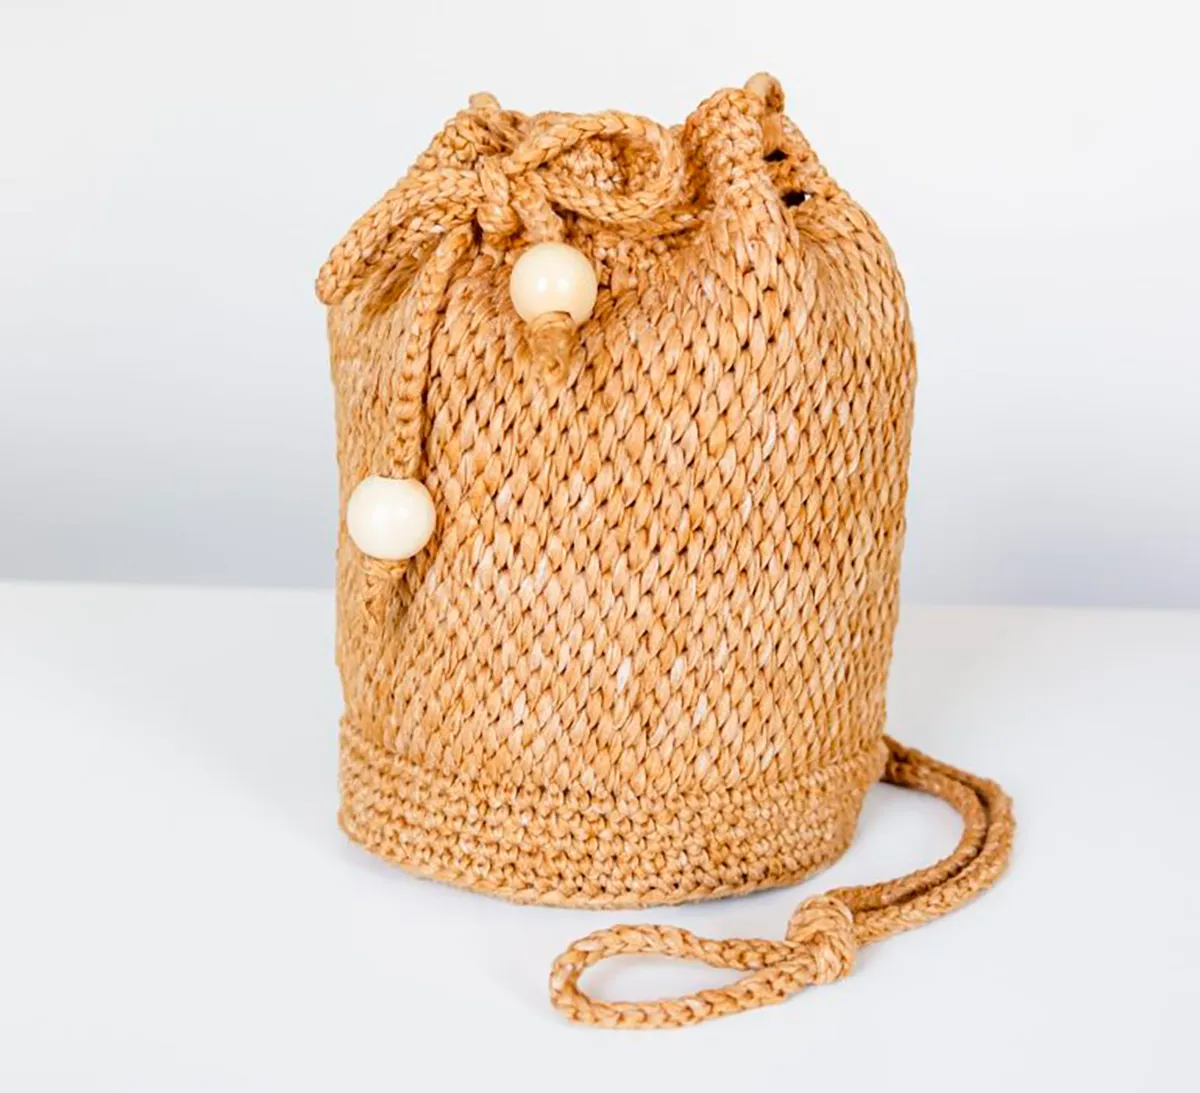 Tunisian crochet patterns drawstring bag